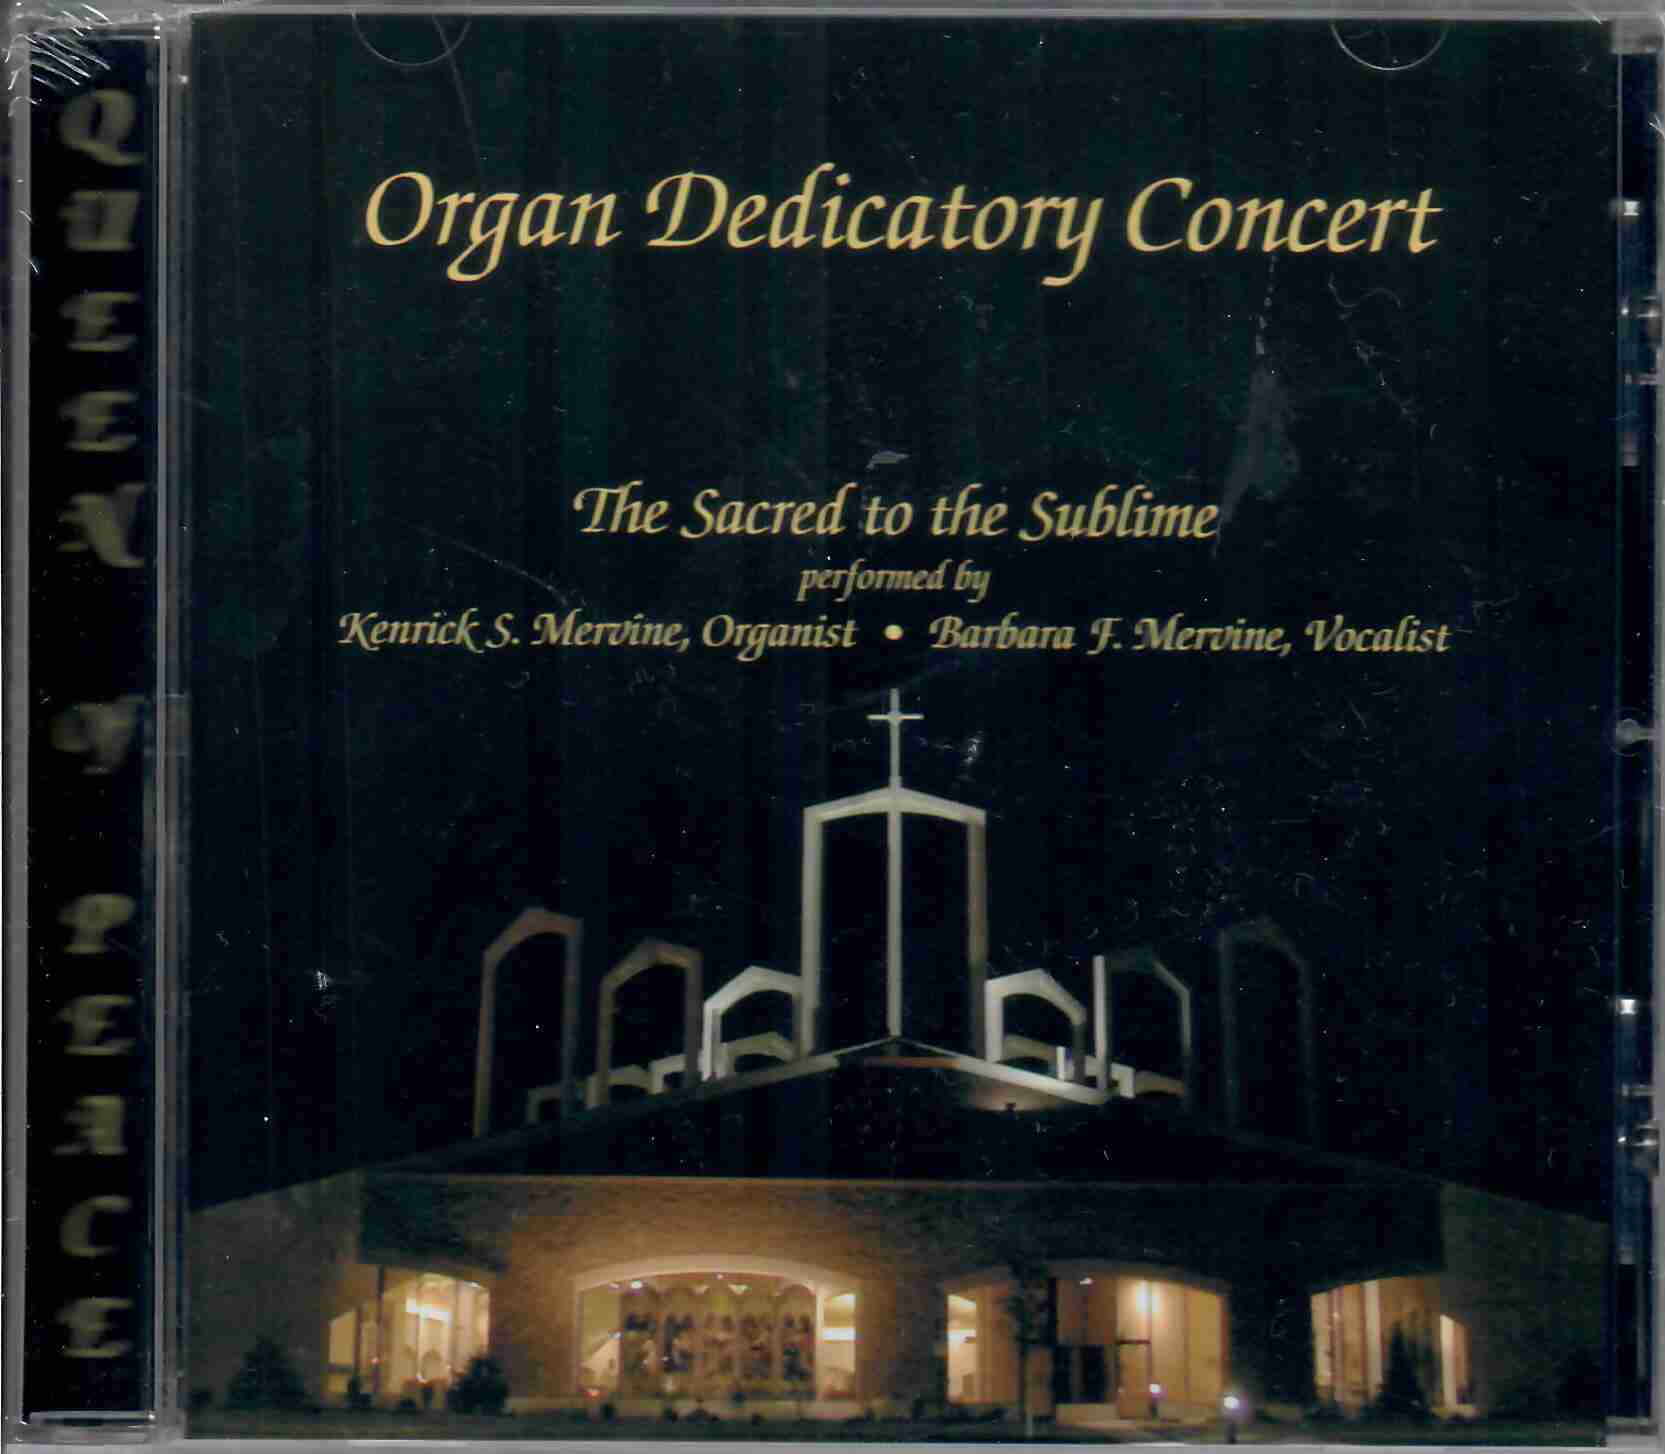 Kenrick S Mervine: Organ Dedicatory Concert.